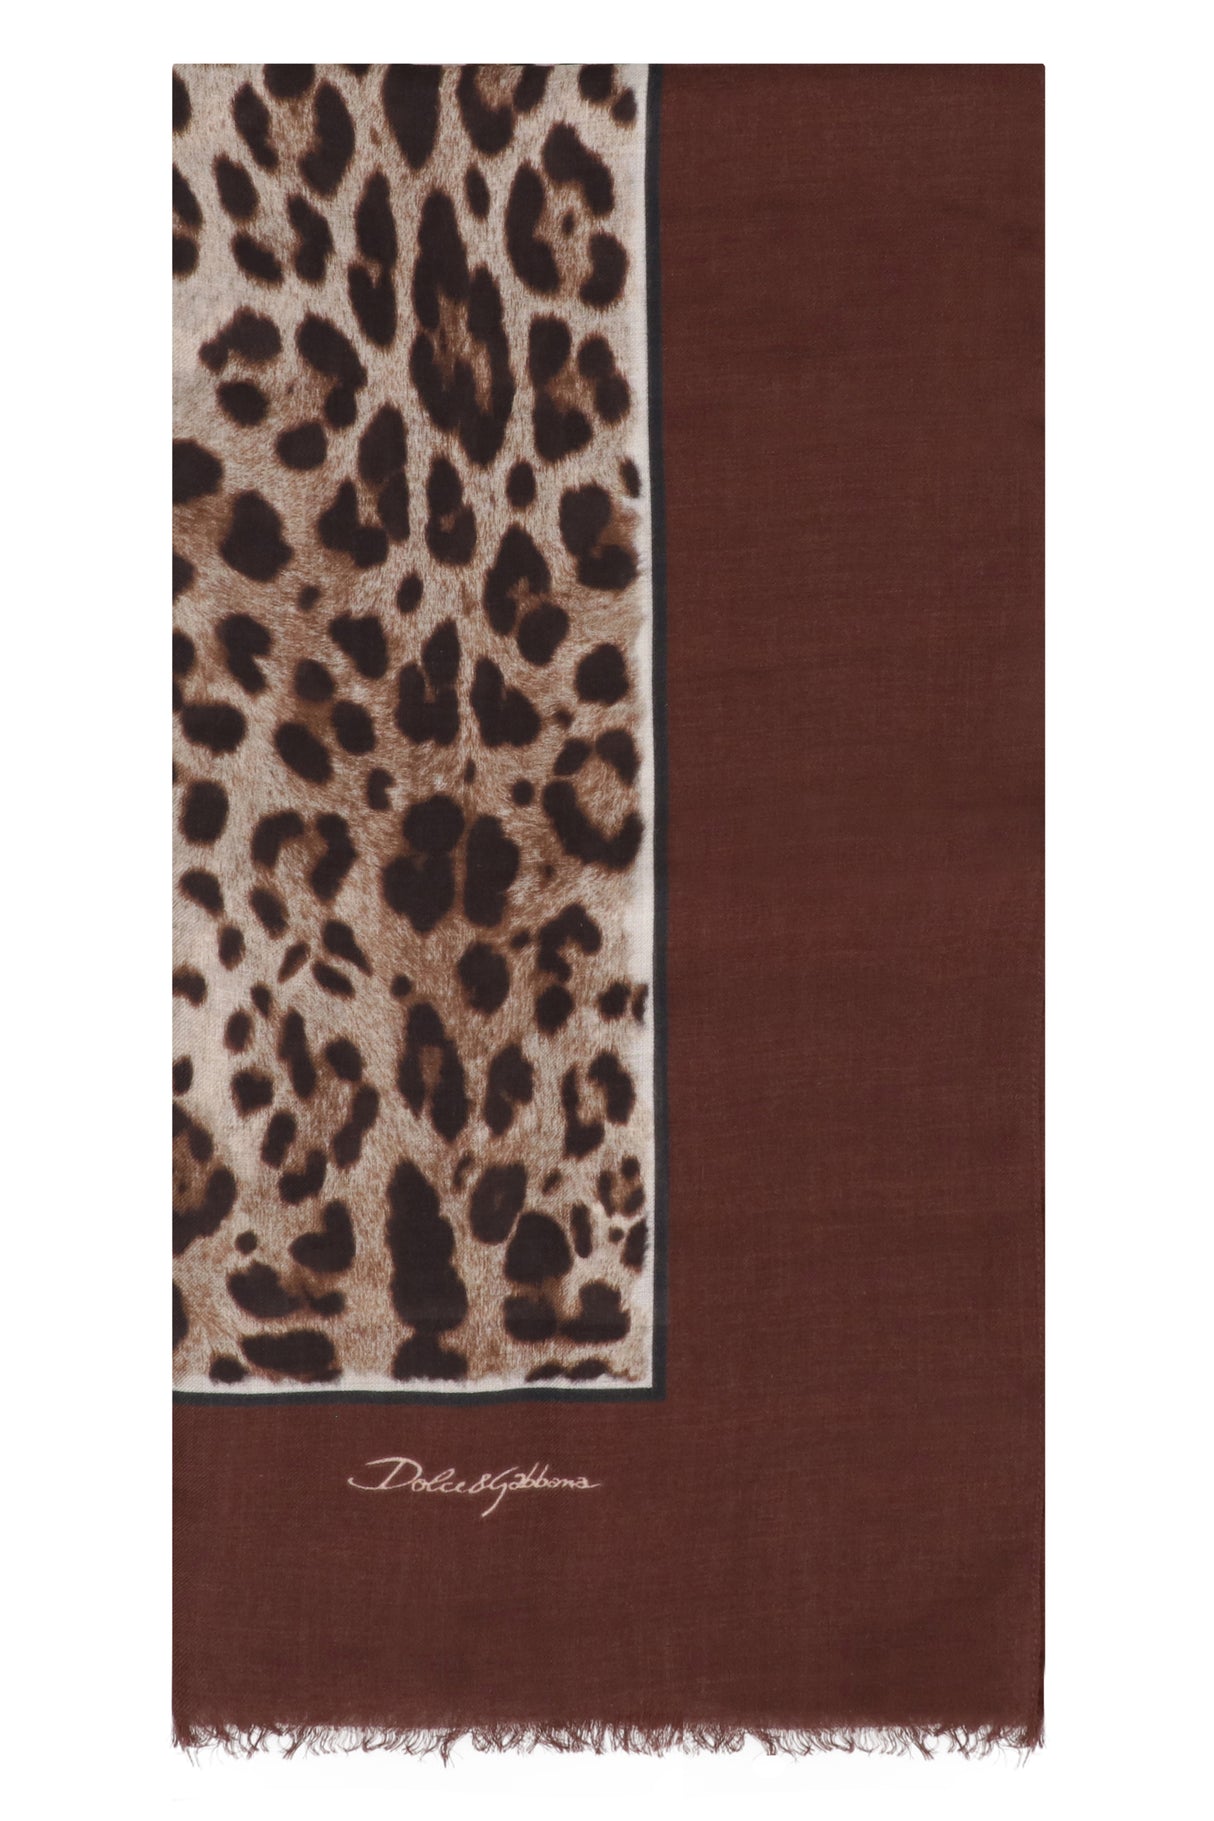 DOLCE & GABBANA Leopard Print Modal and Cashmere Blend Scarf - Size 135 x 200 CM